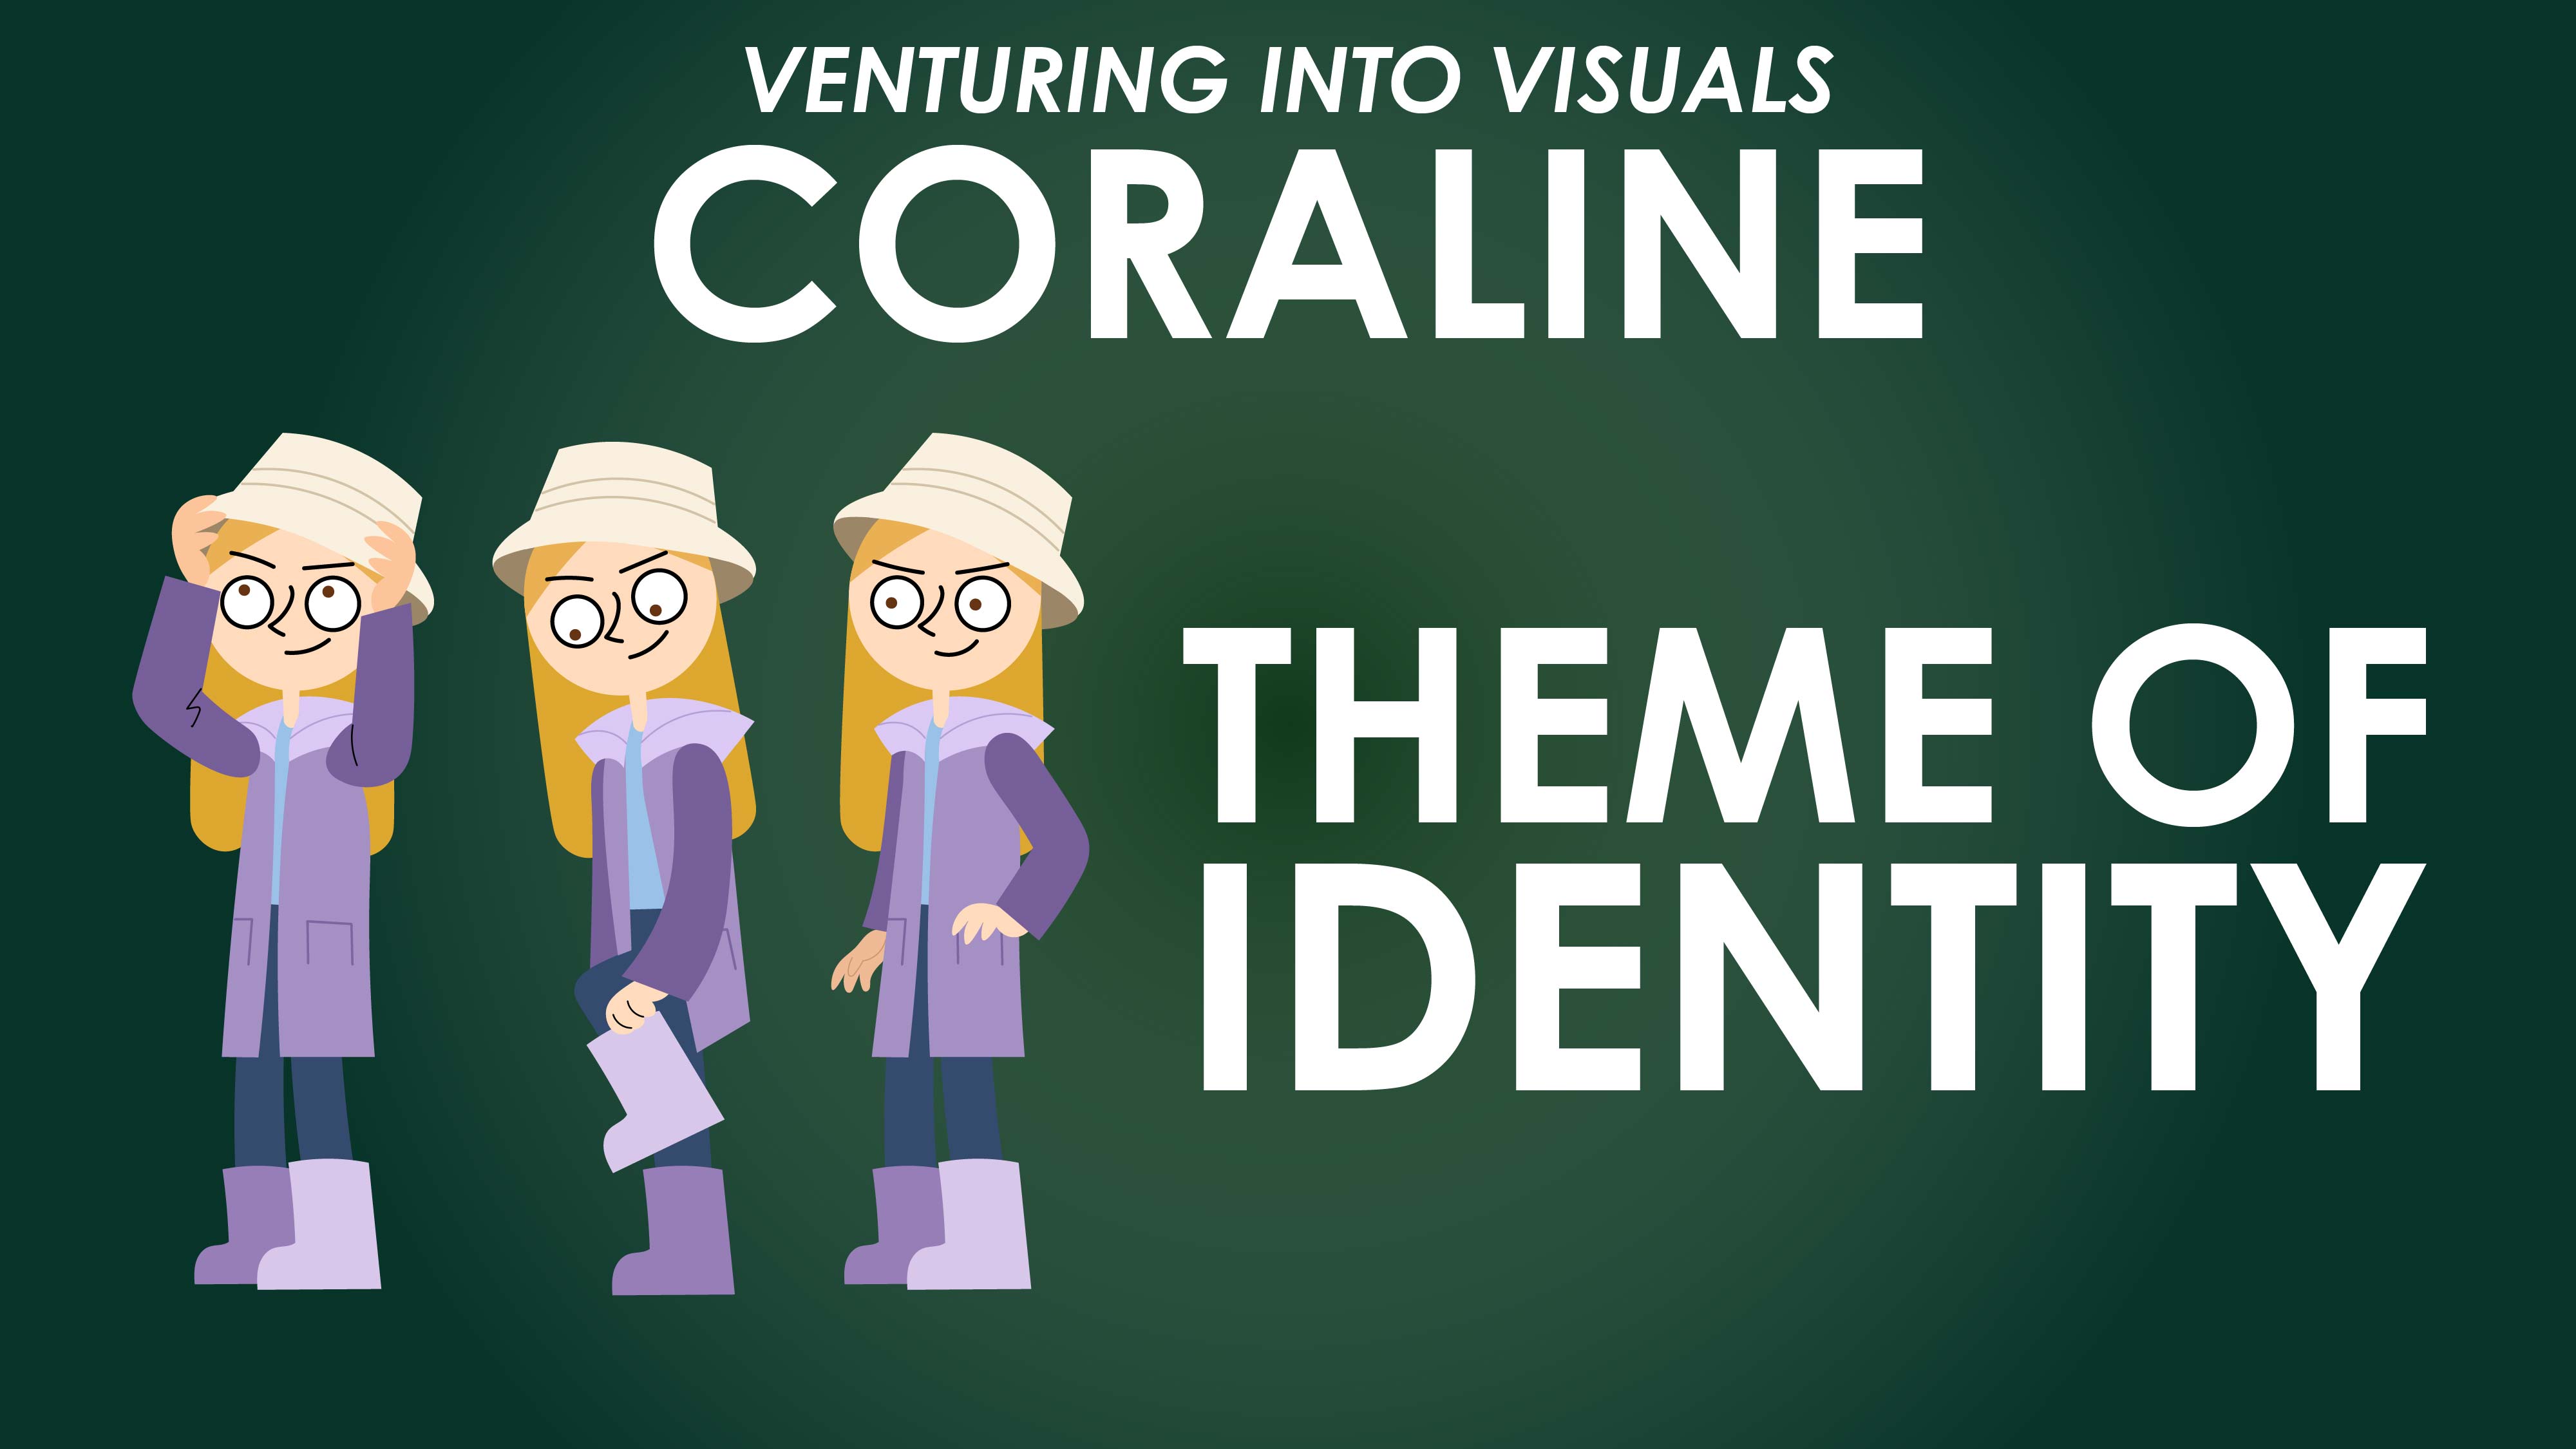 Coraline - Neil Gaiman - Theme of identity - Venturing Into Visuals Series